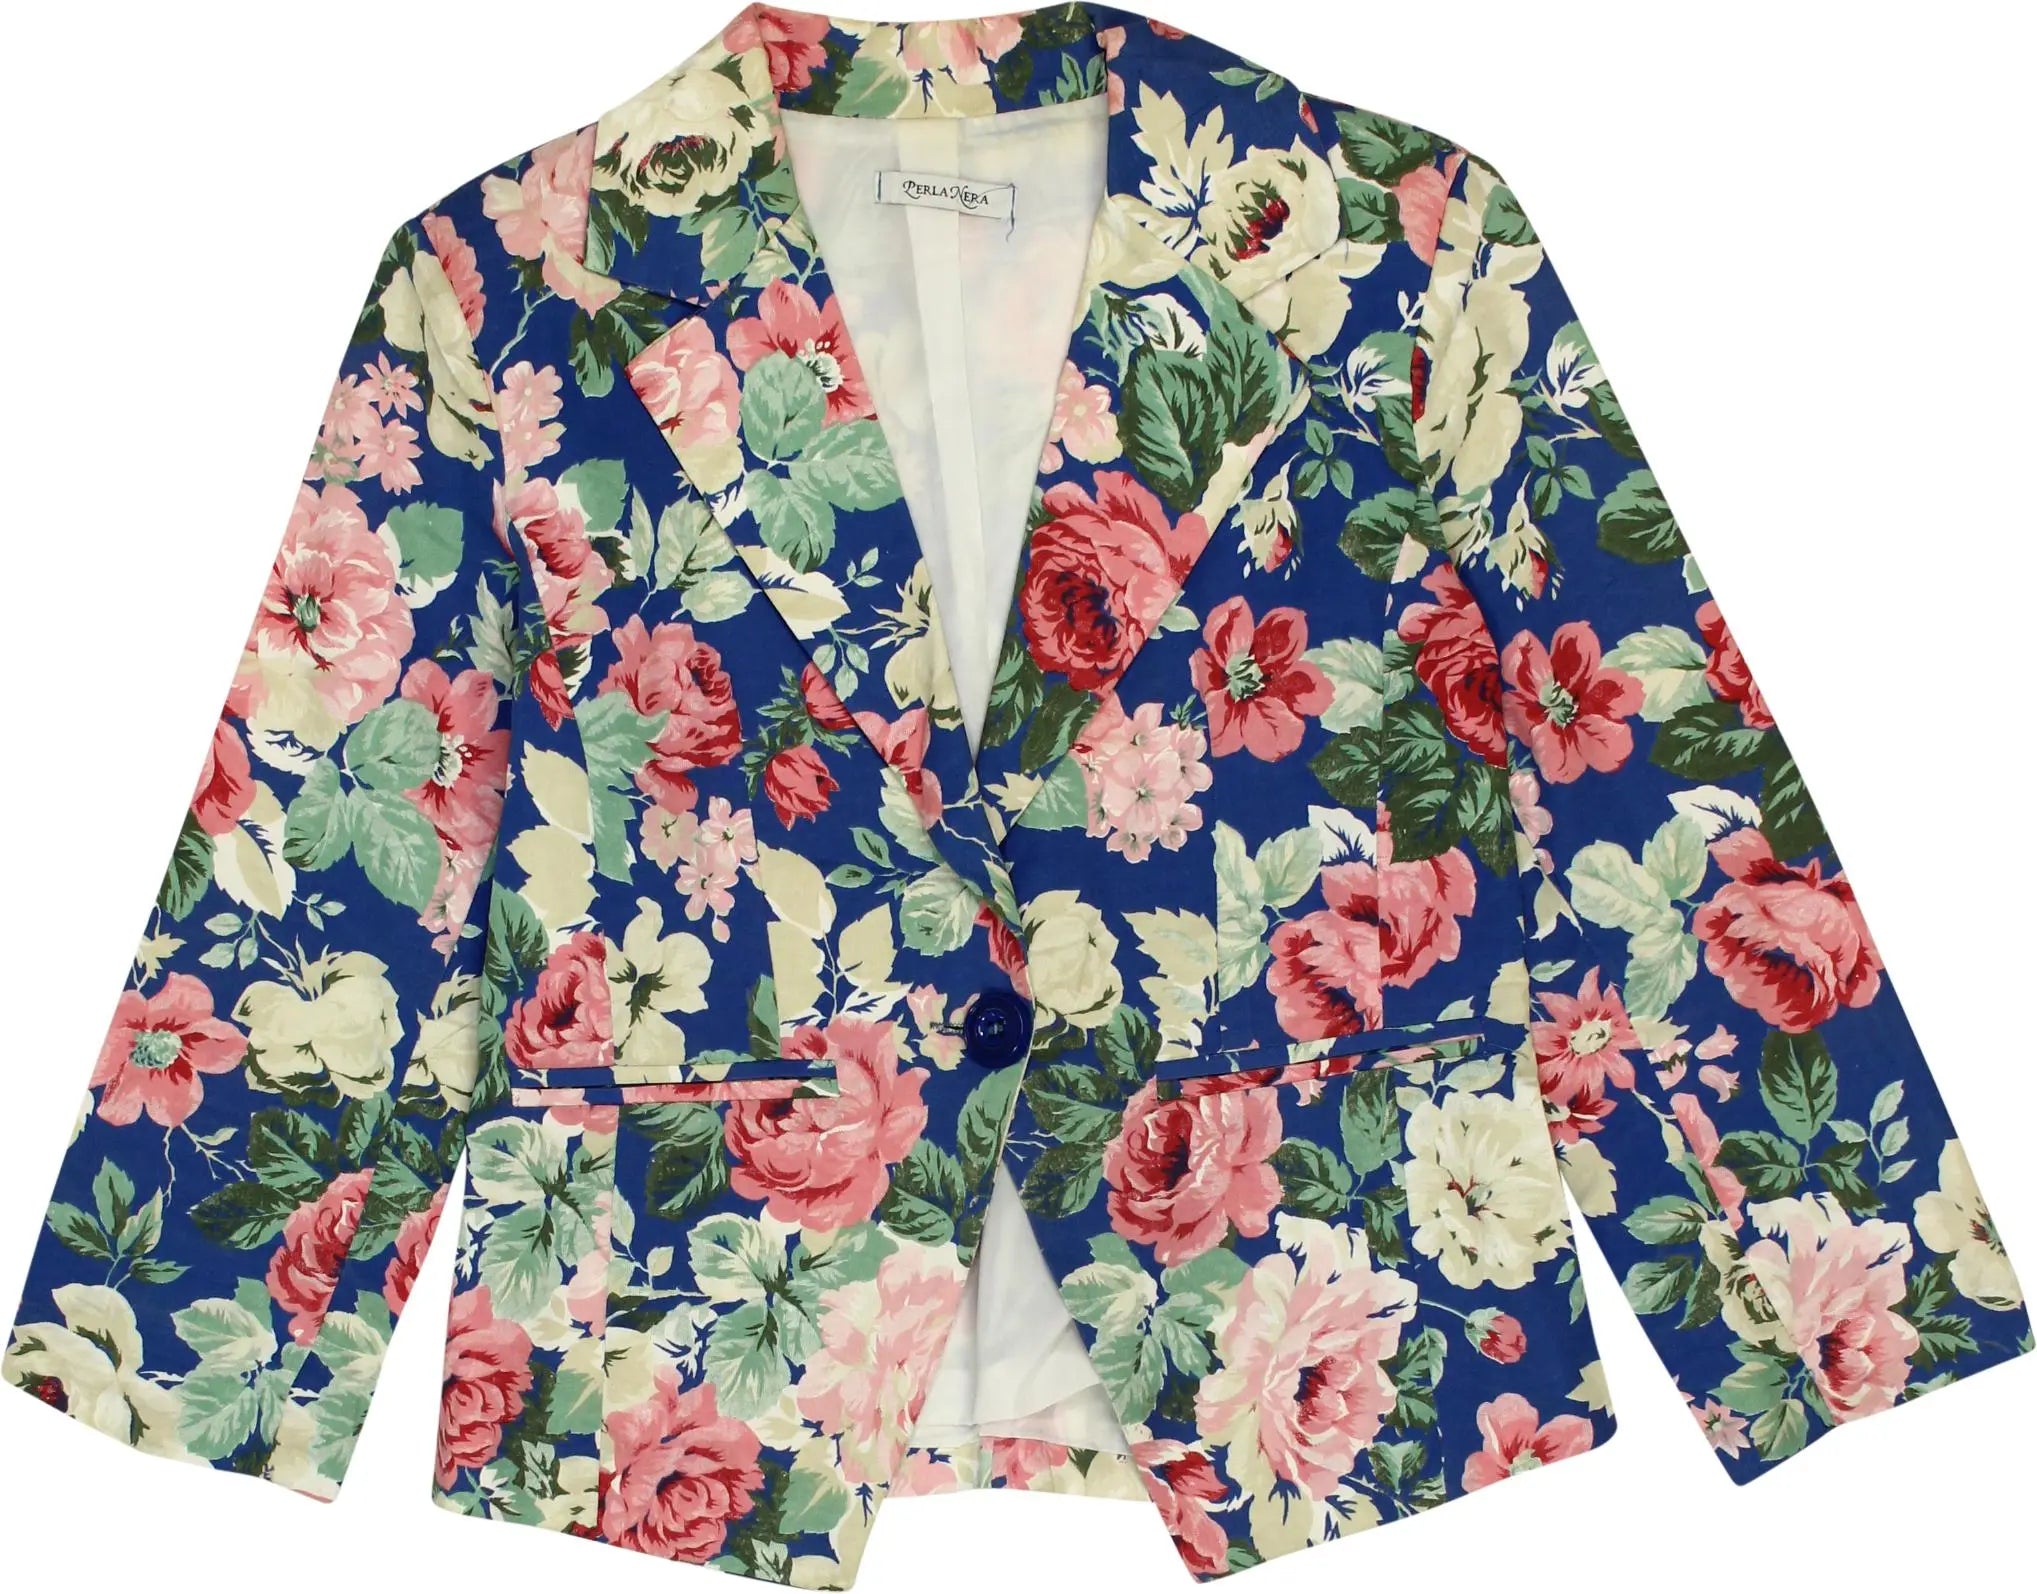 Perla Nera - Floral Blazer- ThriftTale.com - Vintage and second handclothing